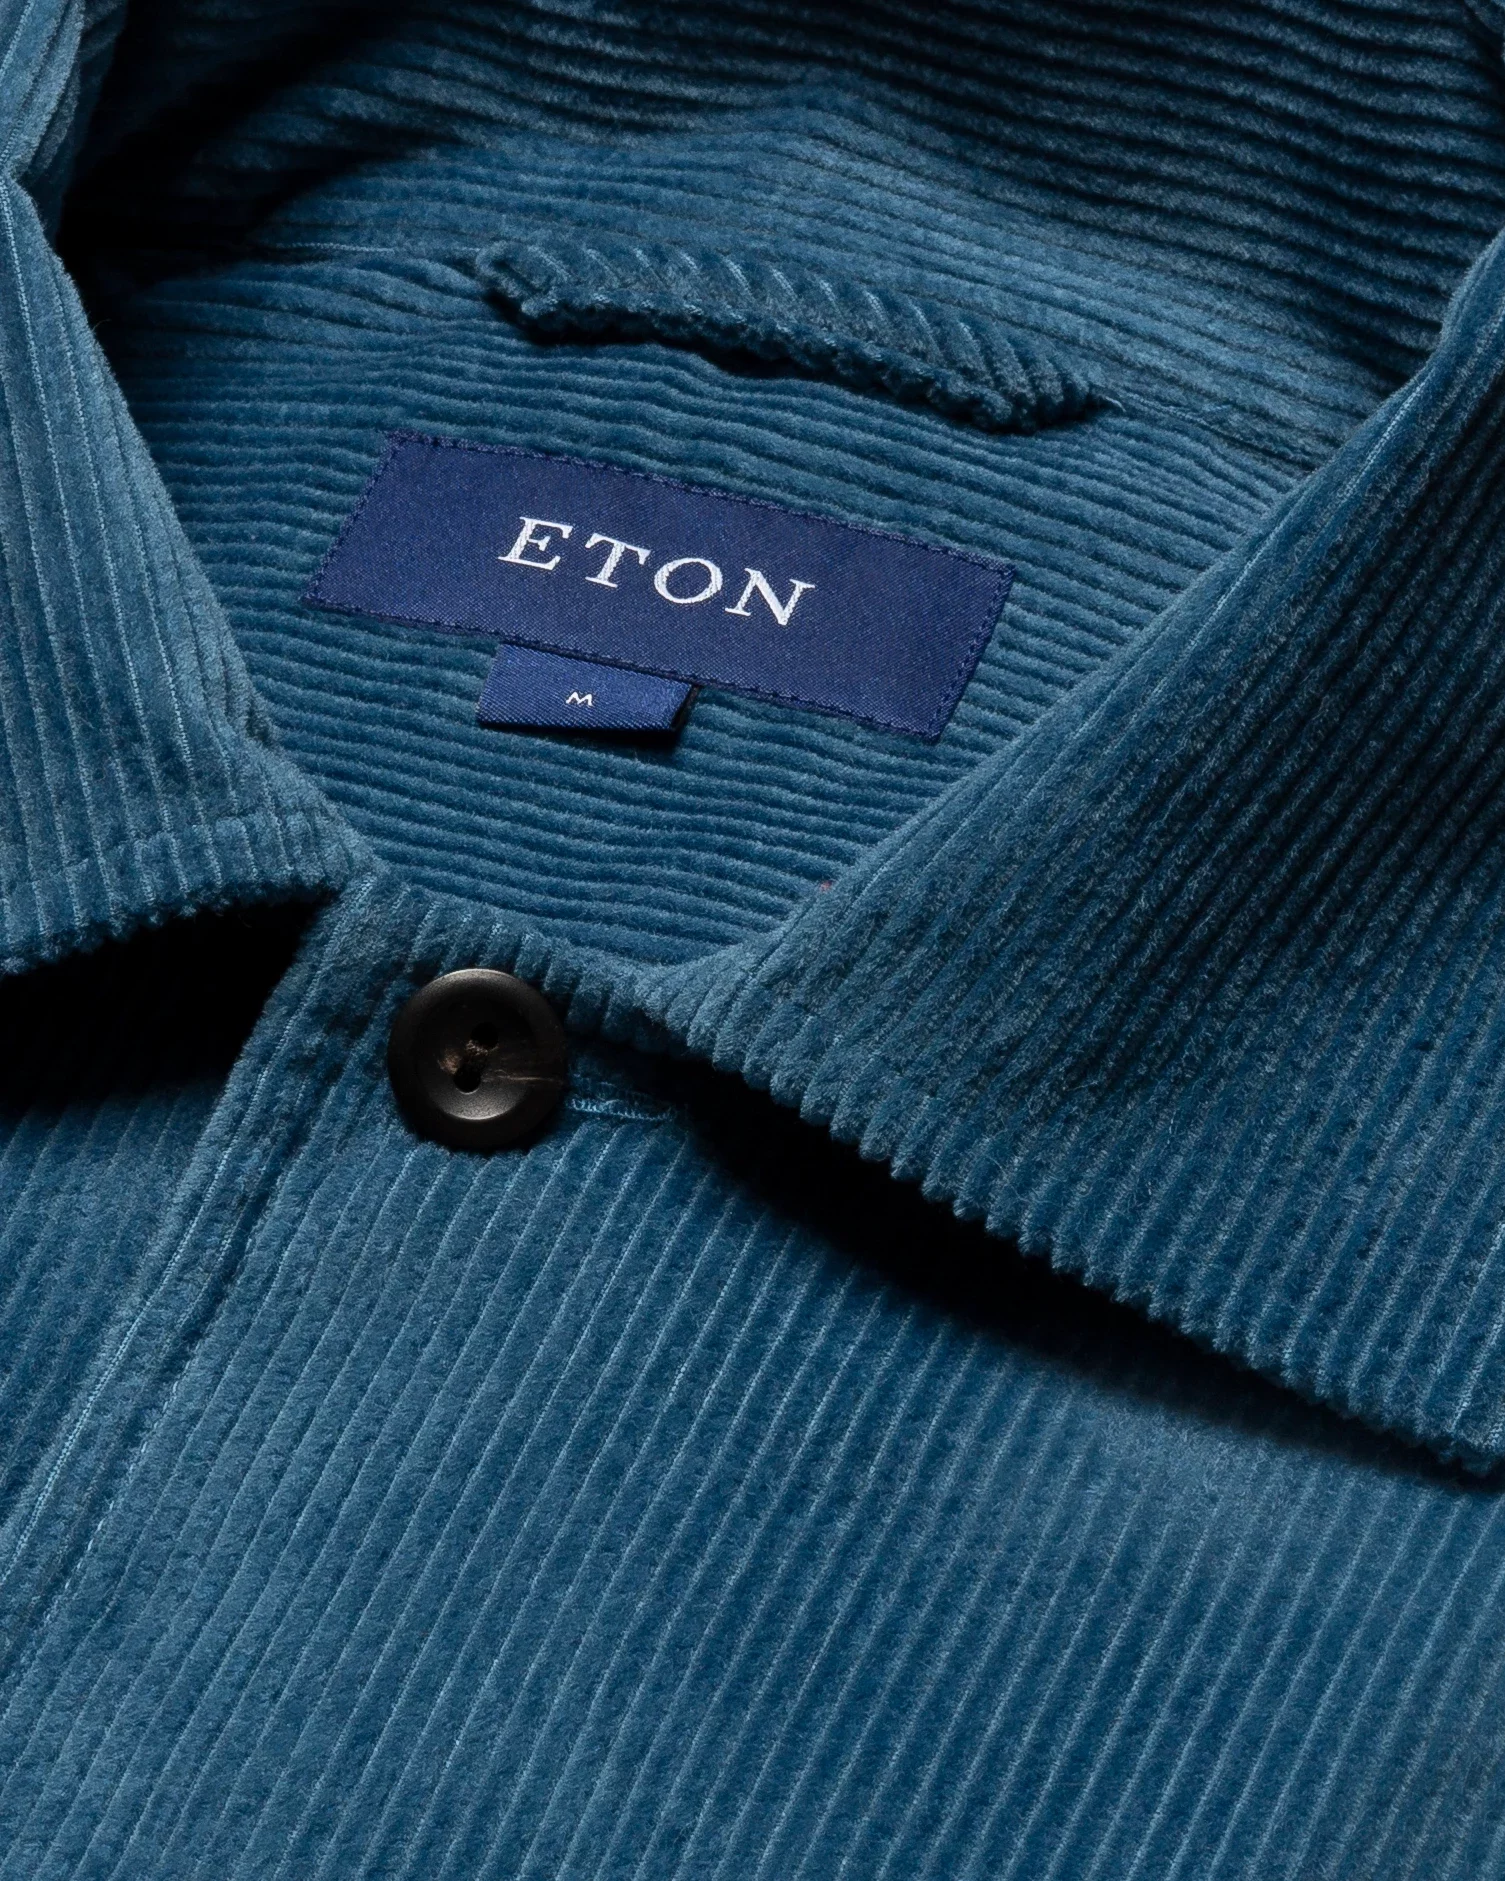 Eton - blue corduroy overshirt turn down straight sleeve end regular